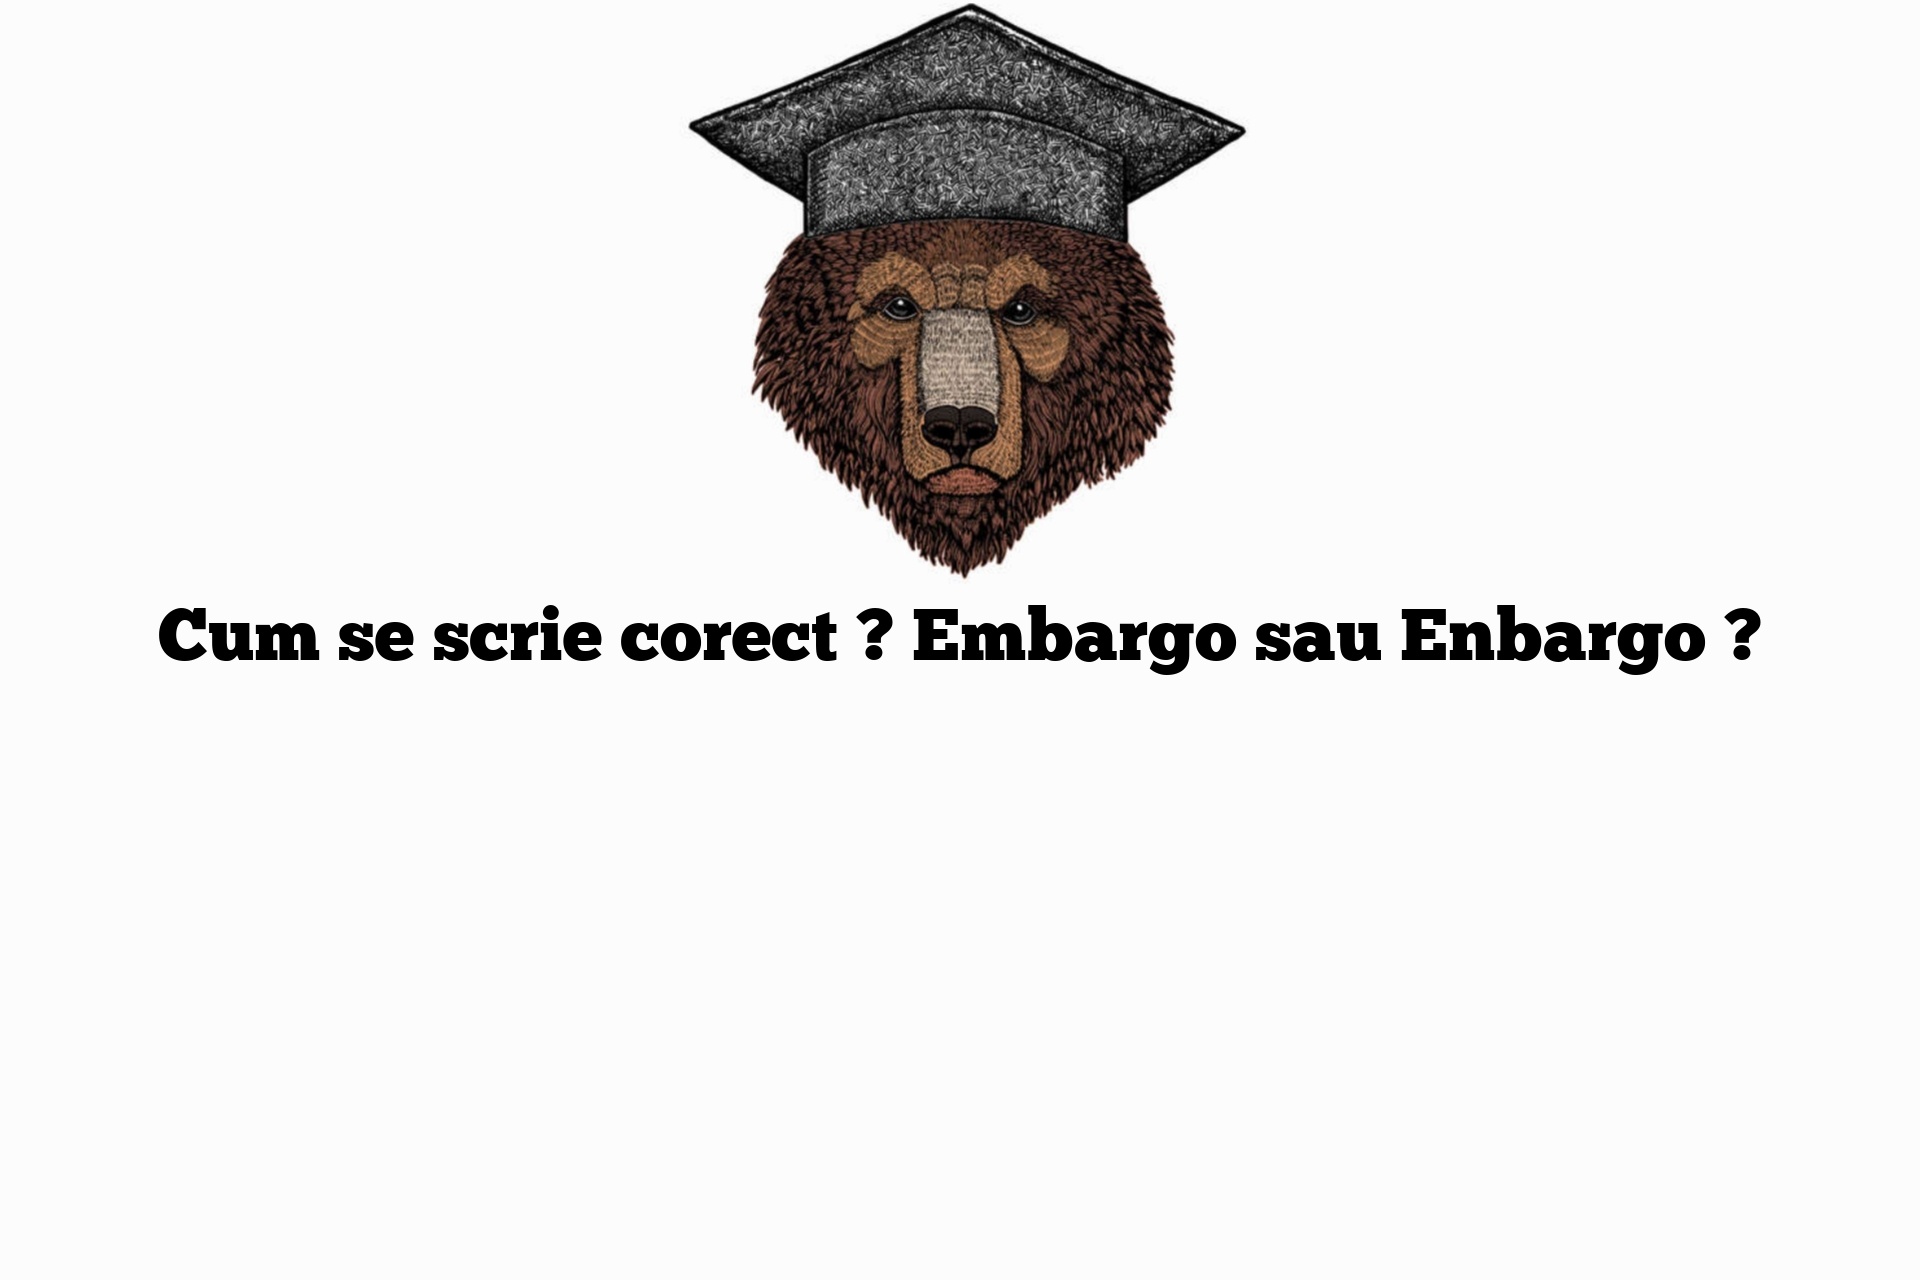 Cum se scrie corect ? Embargo sau Enbargo ?